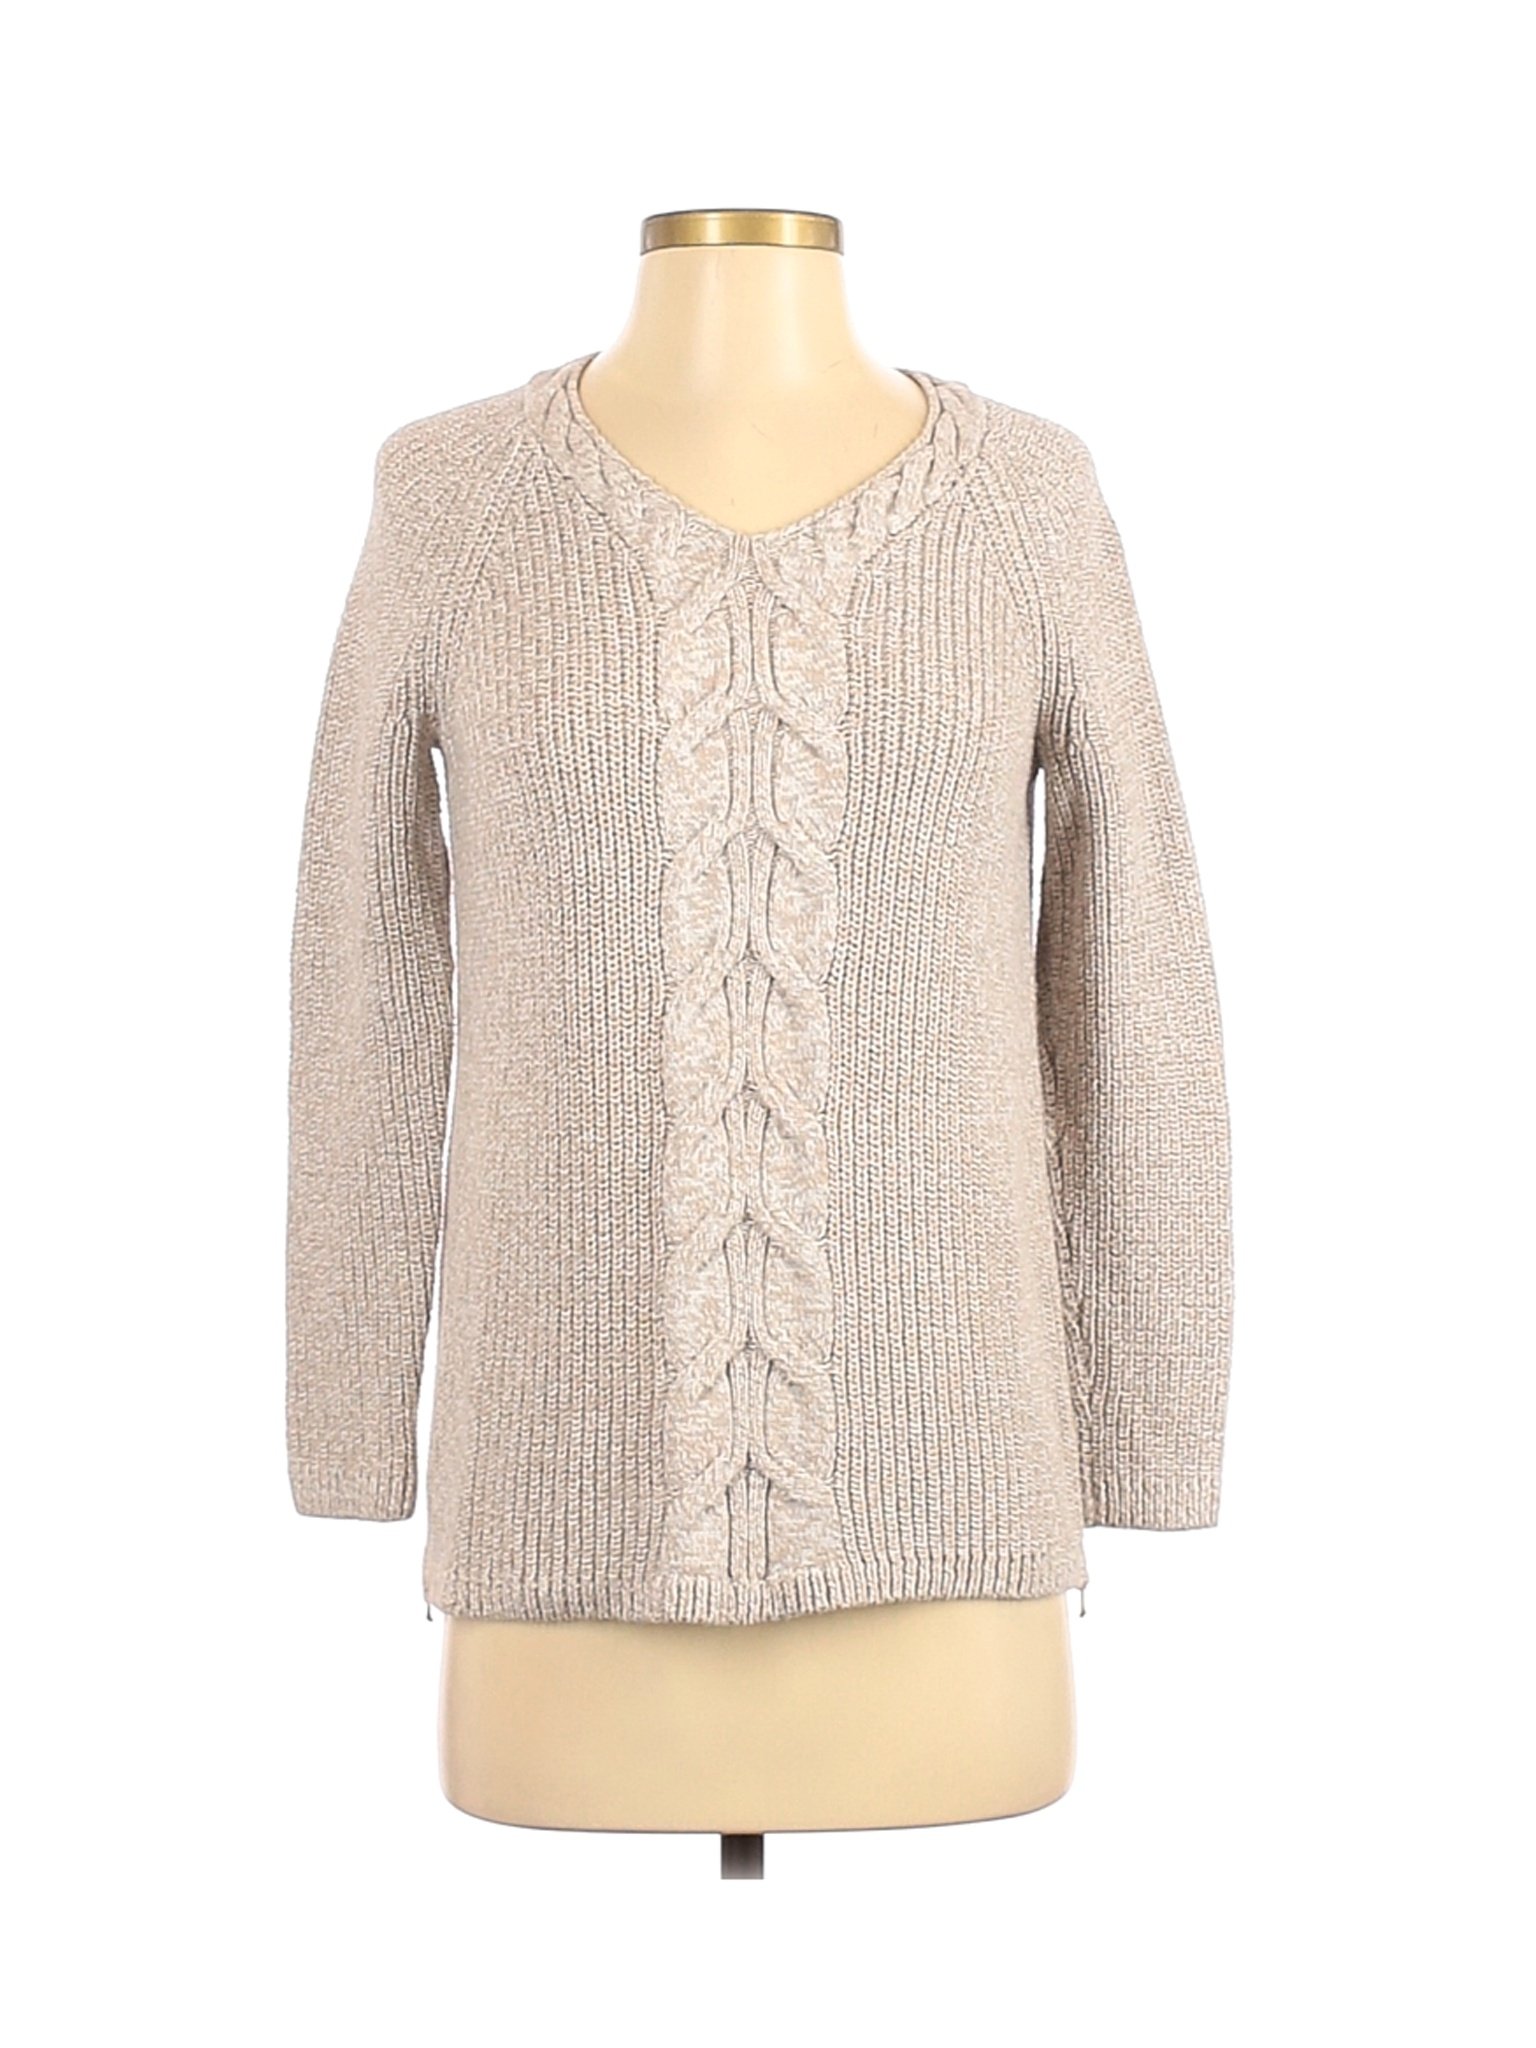 Talbots Women Brown Pullover Sweater S Petites | eBay